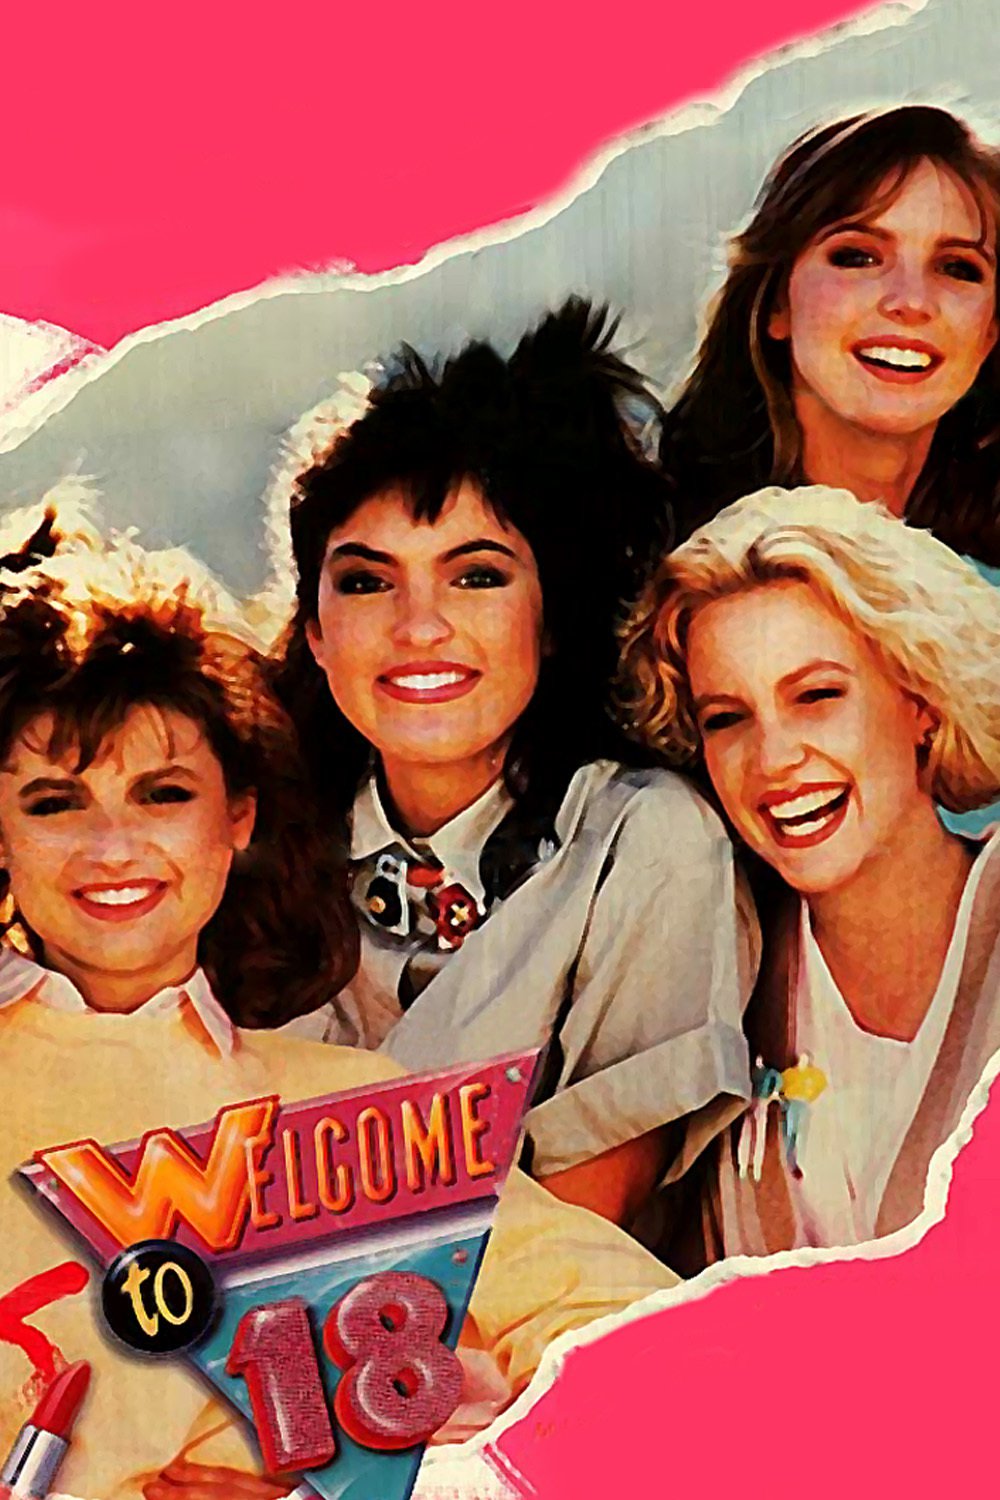 Welcome to 18 (1986) Screenshot 4